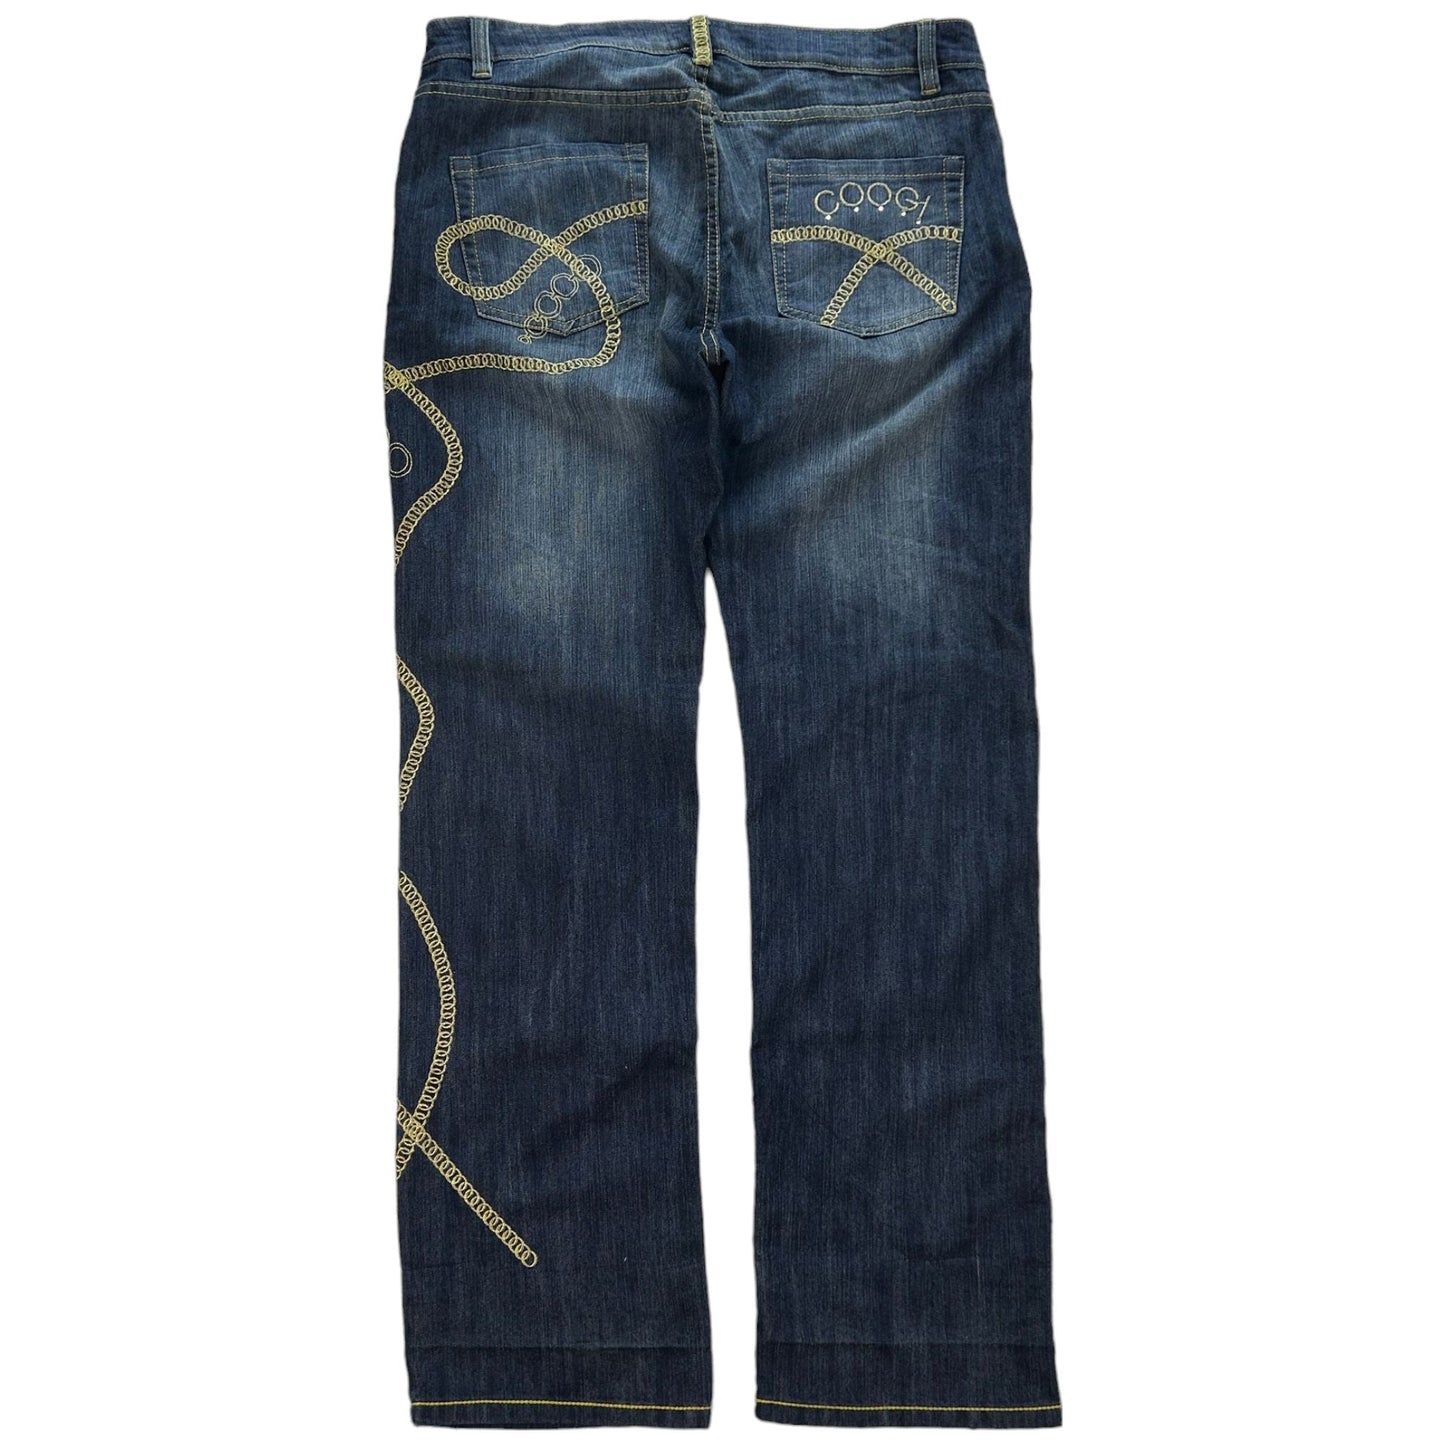 Vintage Coogi Embroidered Denim Jeans Size W37